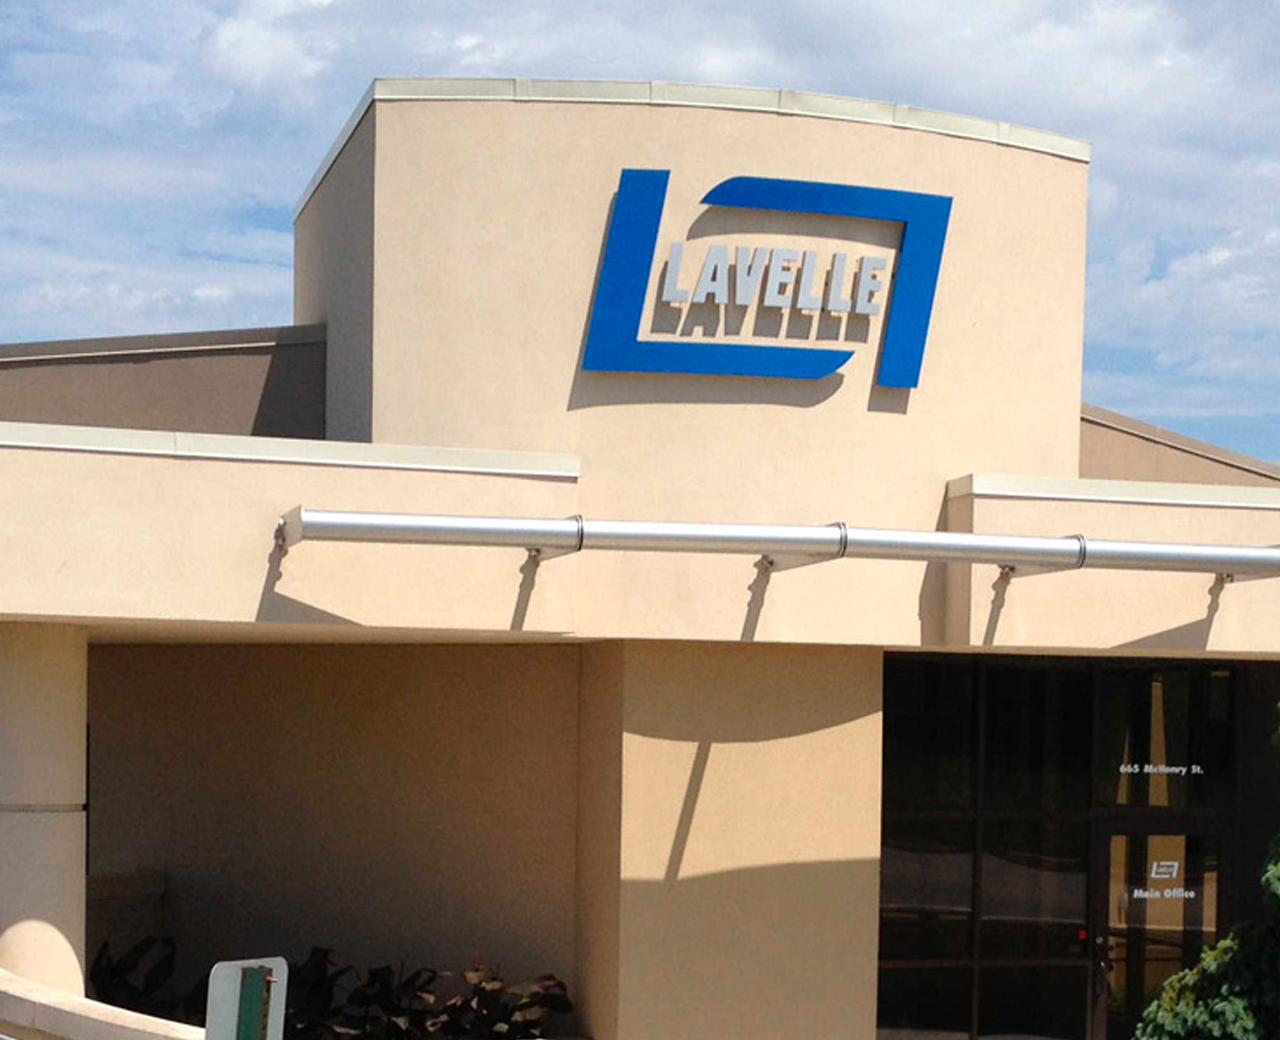 Lavelle Industries